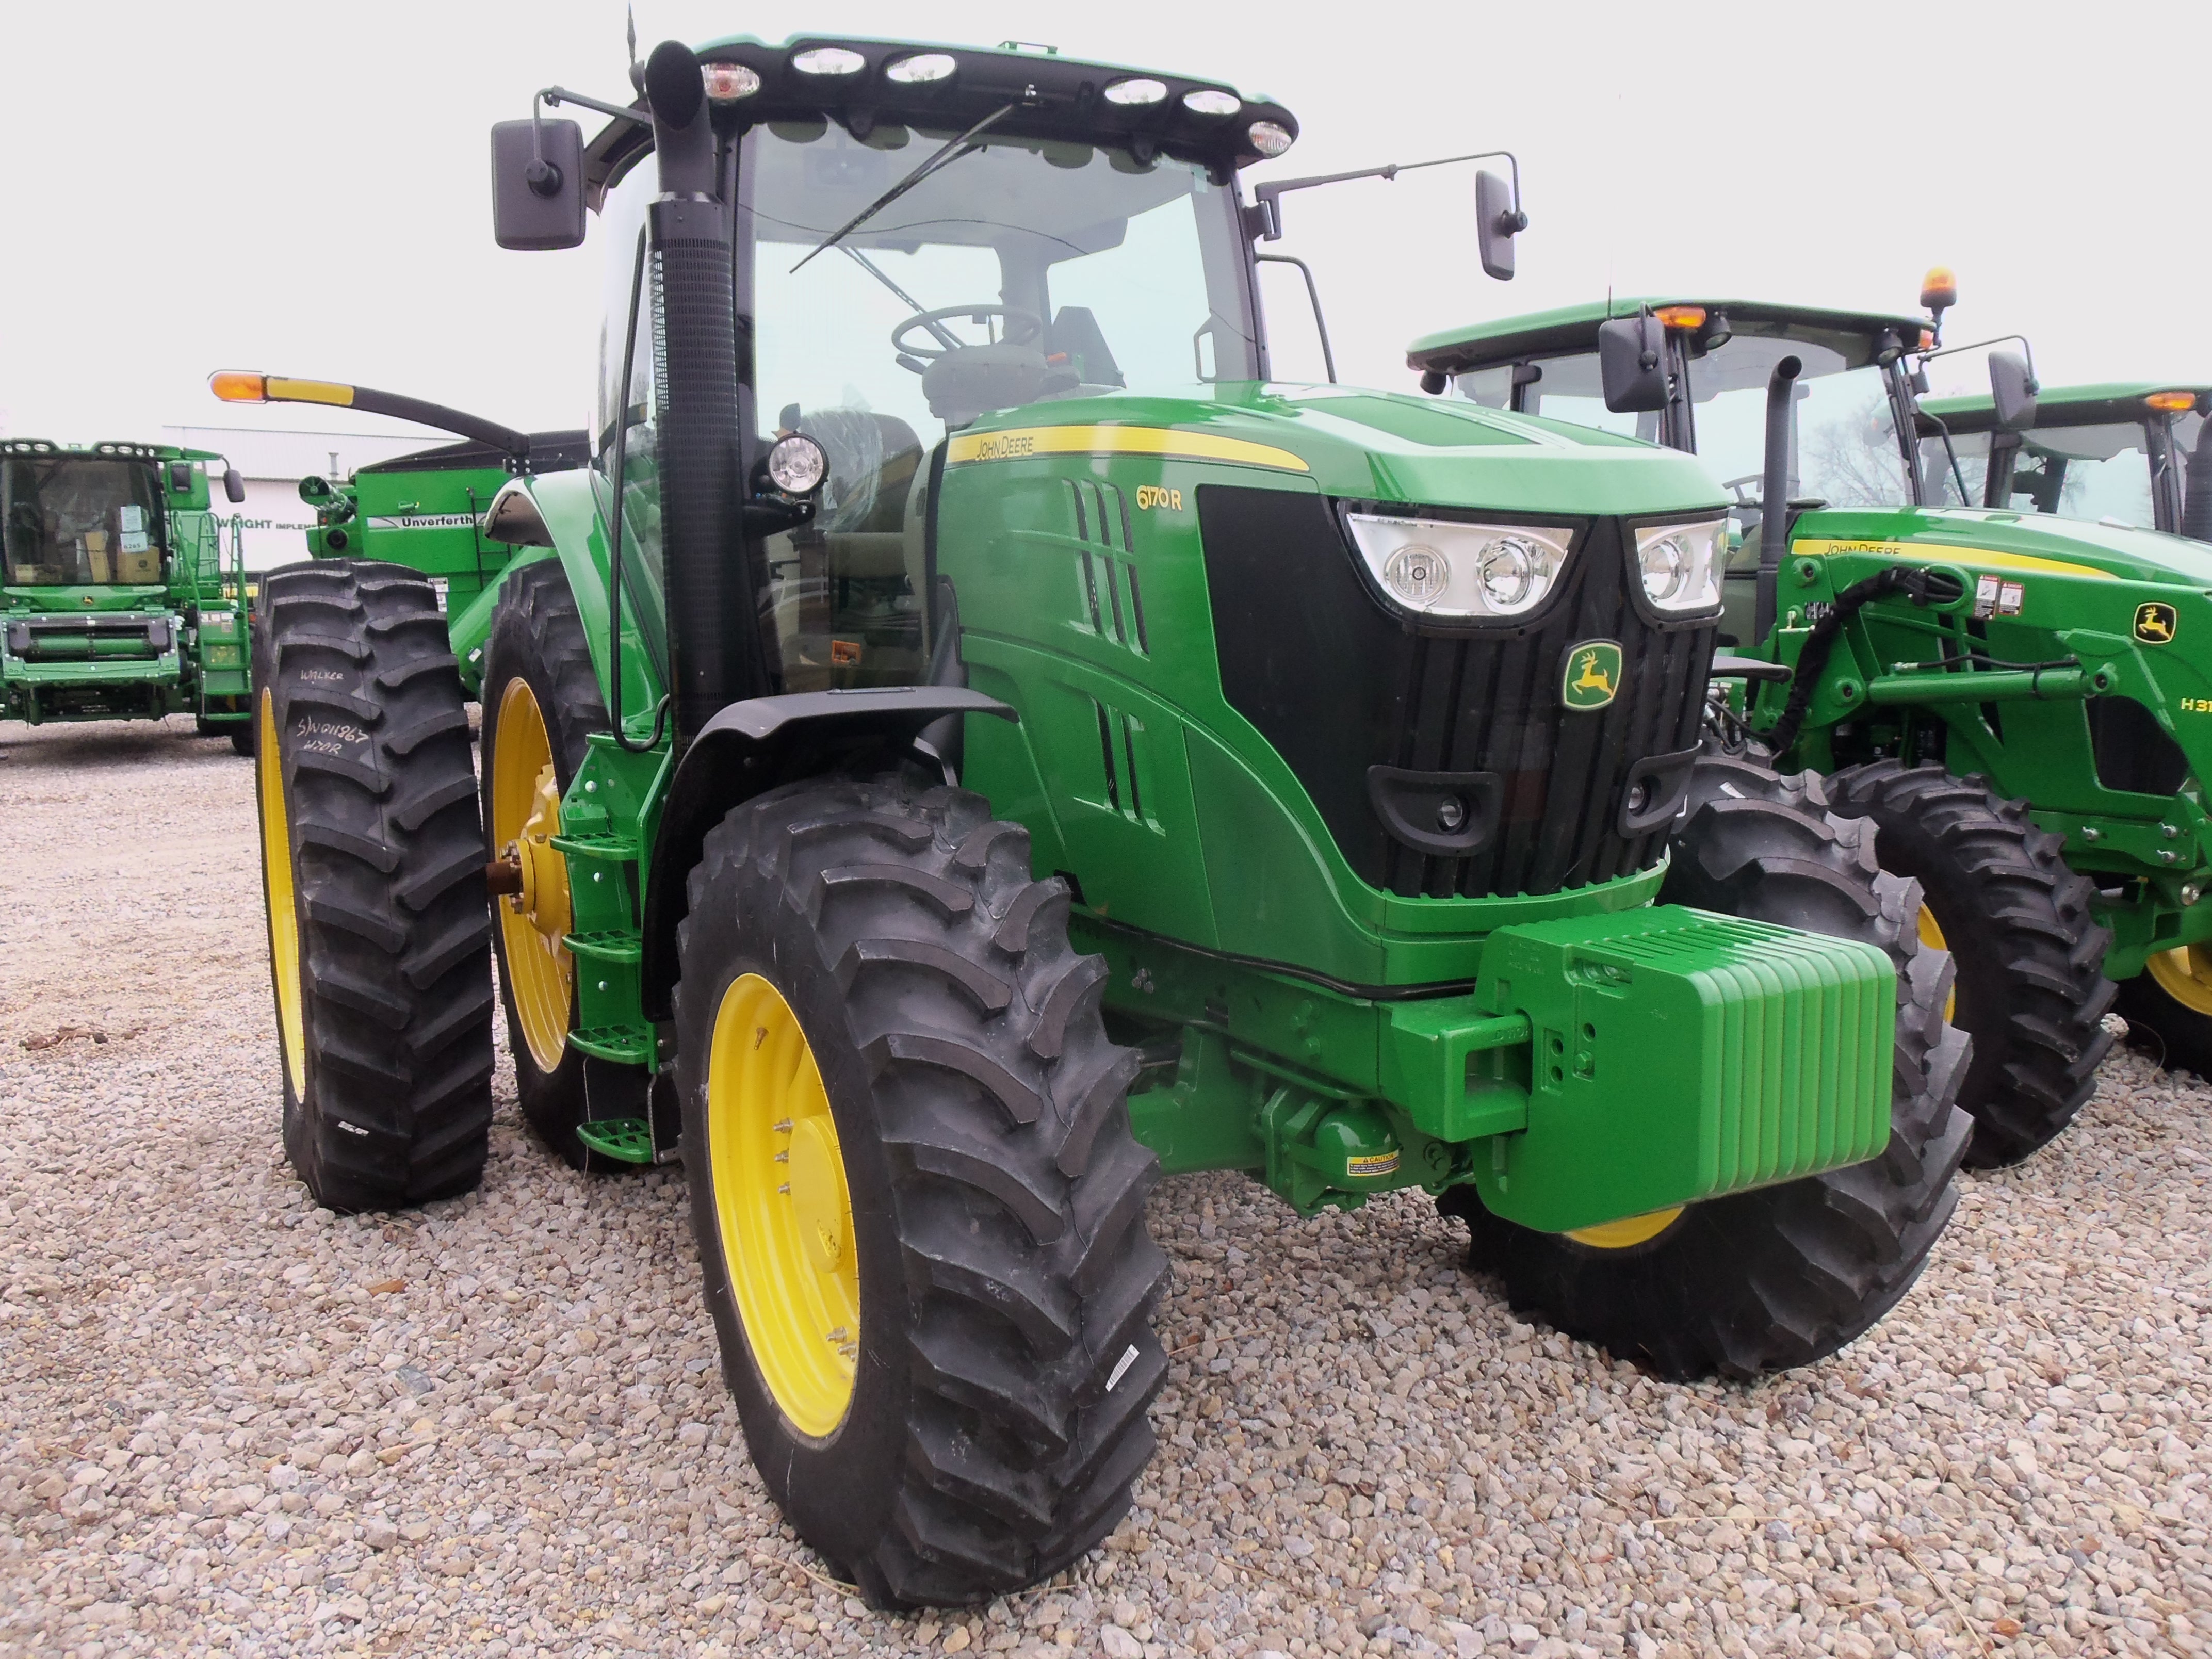 John Deere 6R Series tractor | John Deere equipment | Pinterest